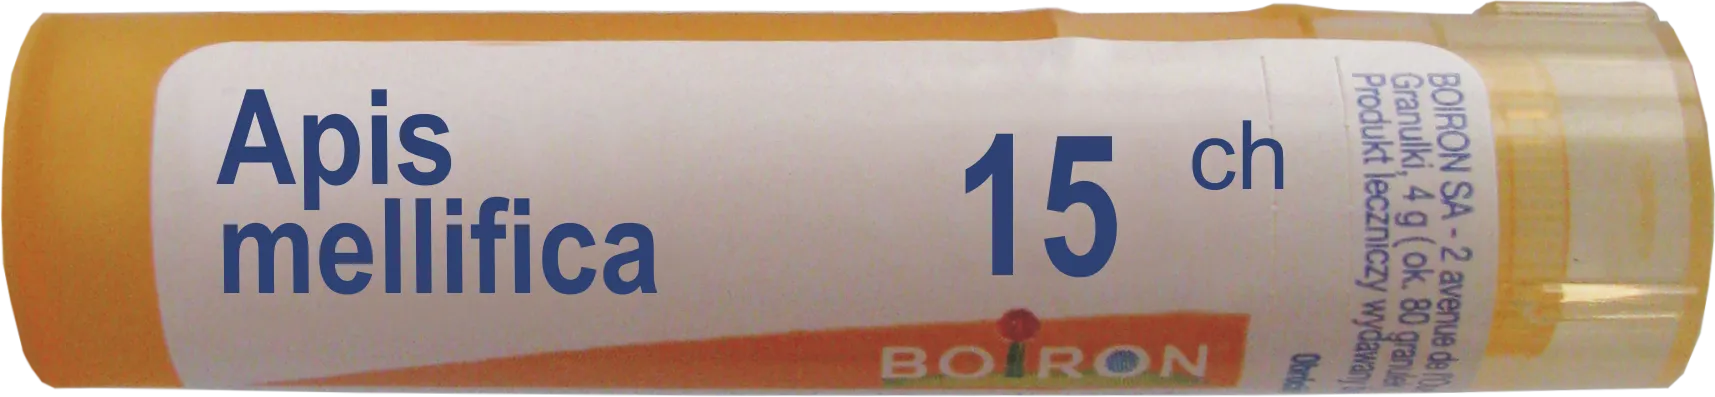 Boiron Apis mellifica 15 CH, granulki, 4 g